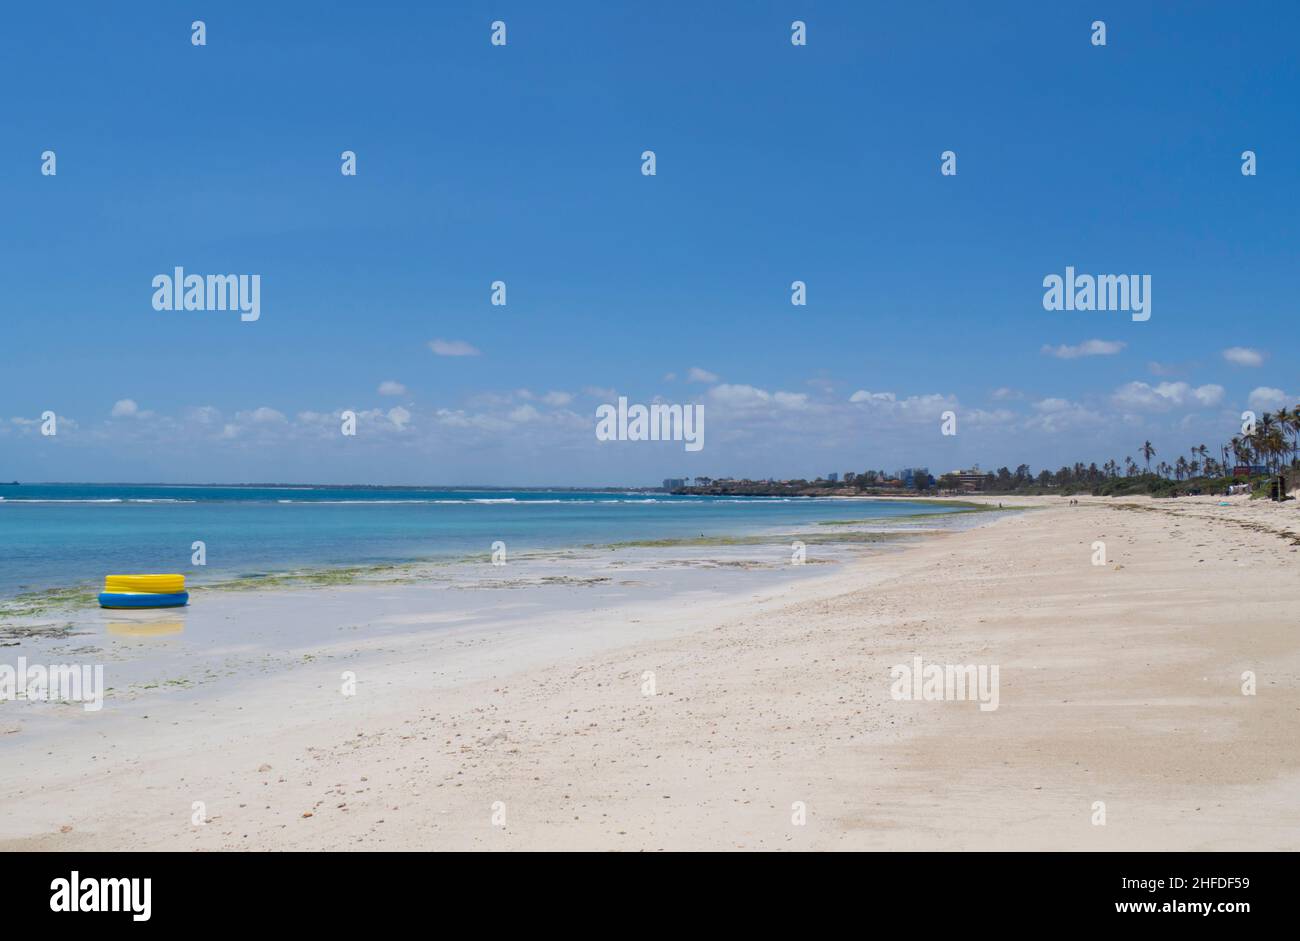 East Africa, Tanzania, Dar es Salaam Coco beach Stock Photo